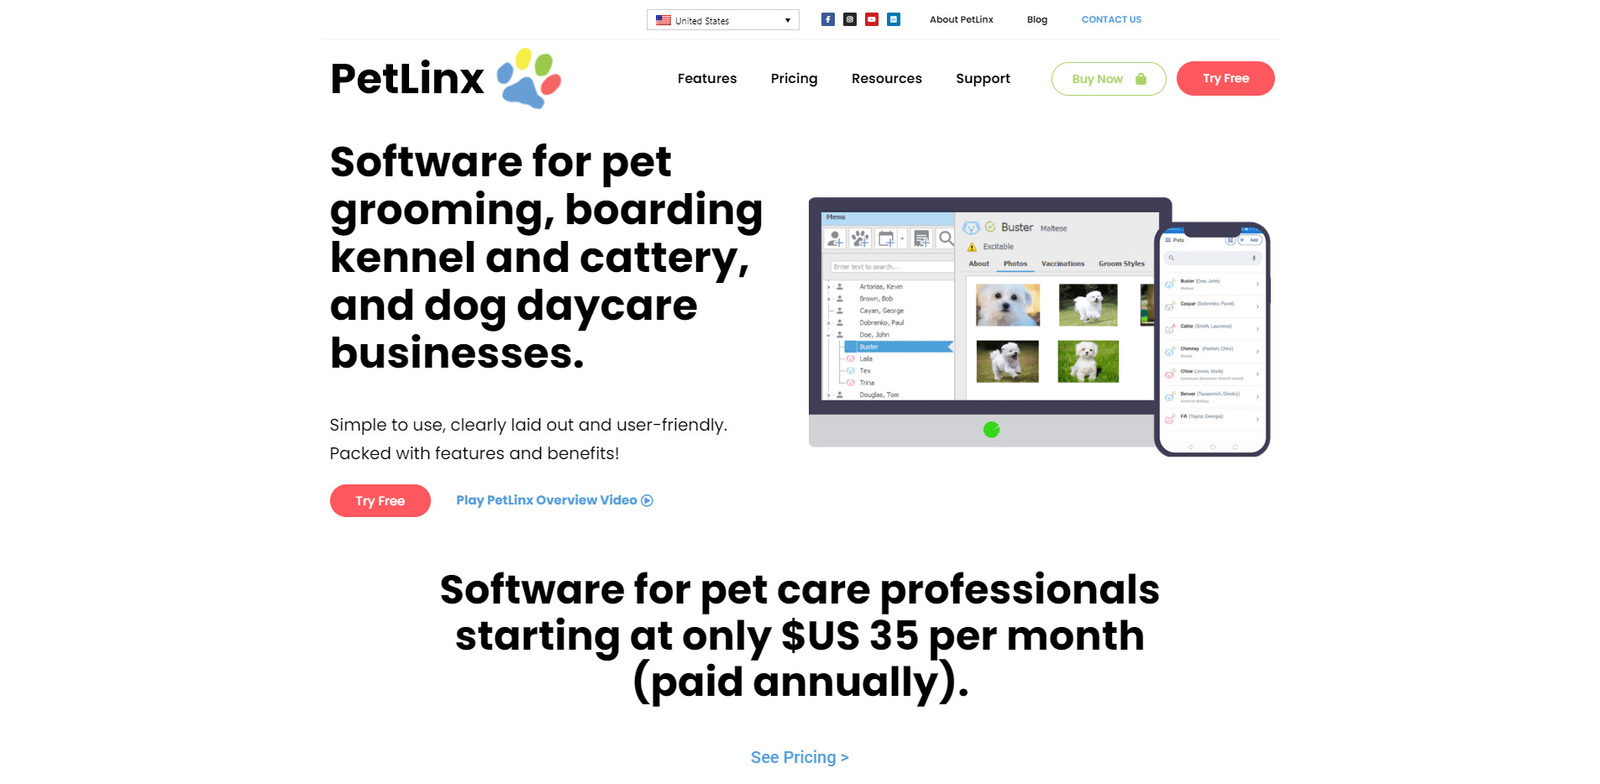 PetLinx 的圖片，這是一款基於桌面和雲端的狗舍應用程式。